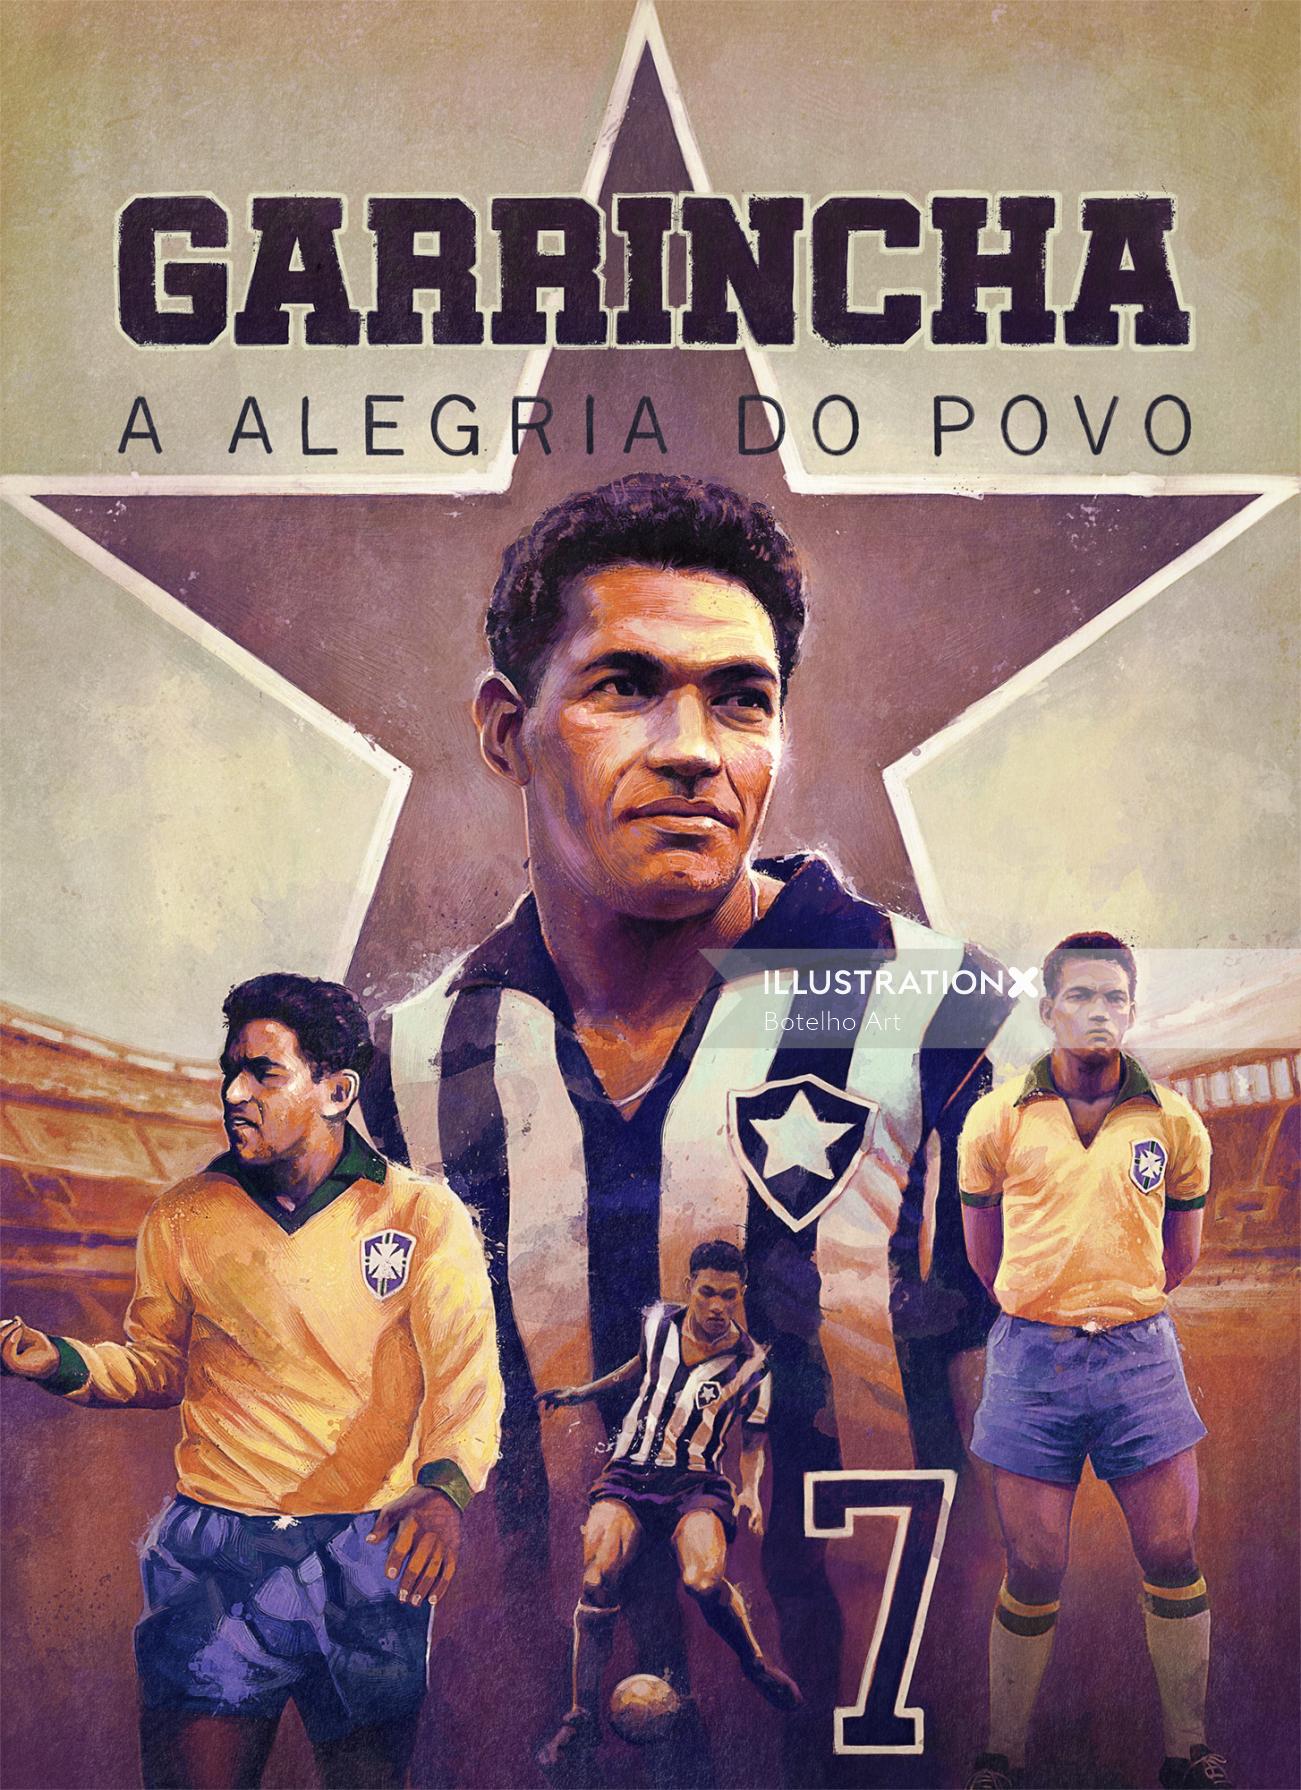 Cover Brazilian soccer star Garrincha